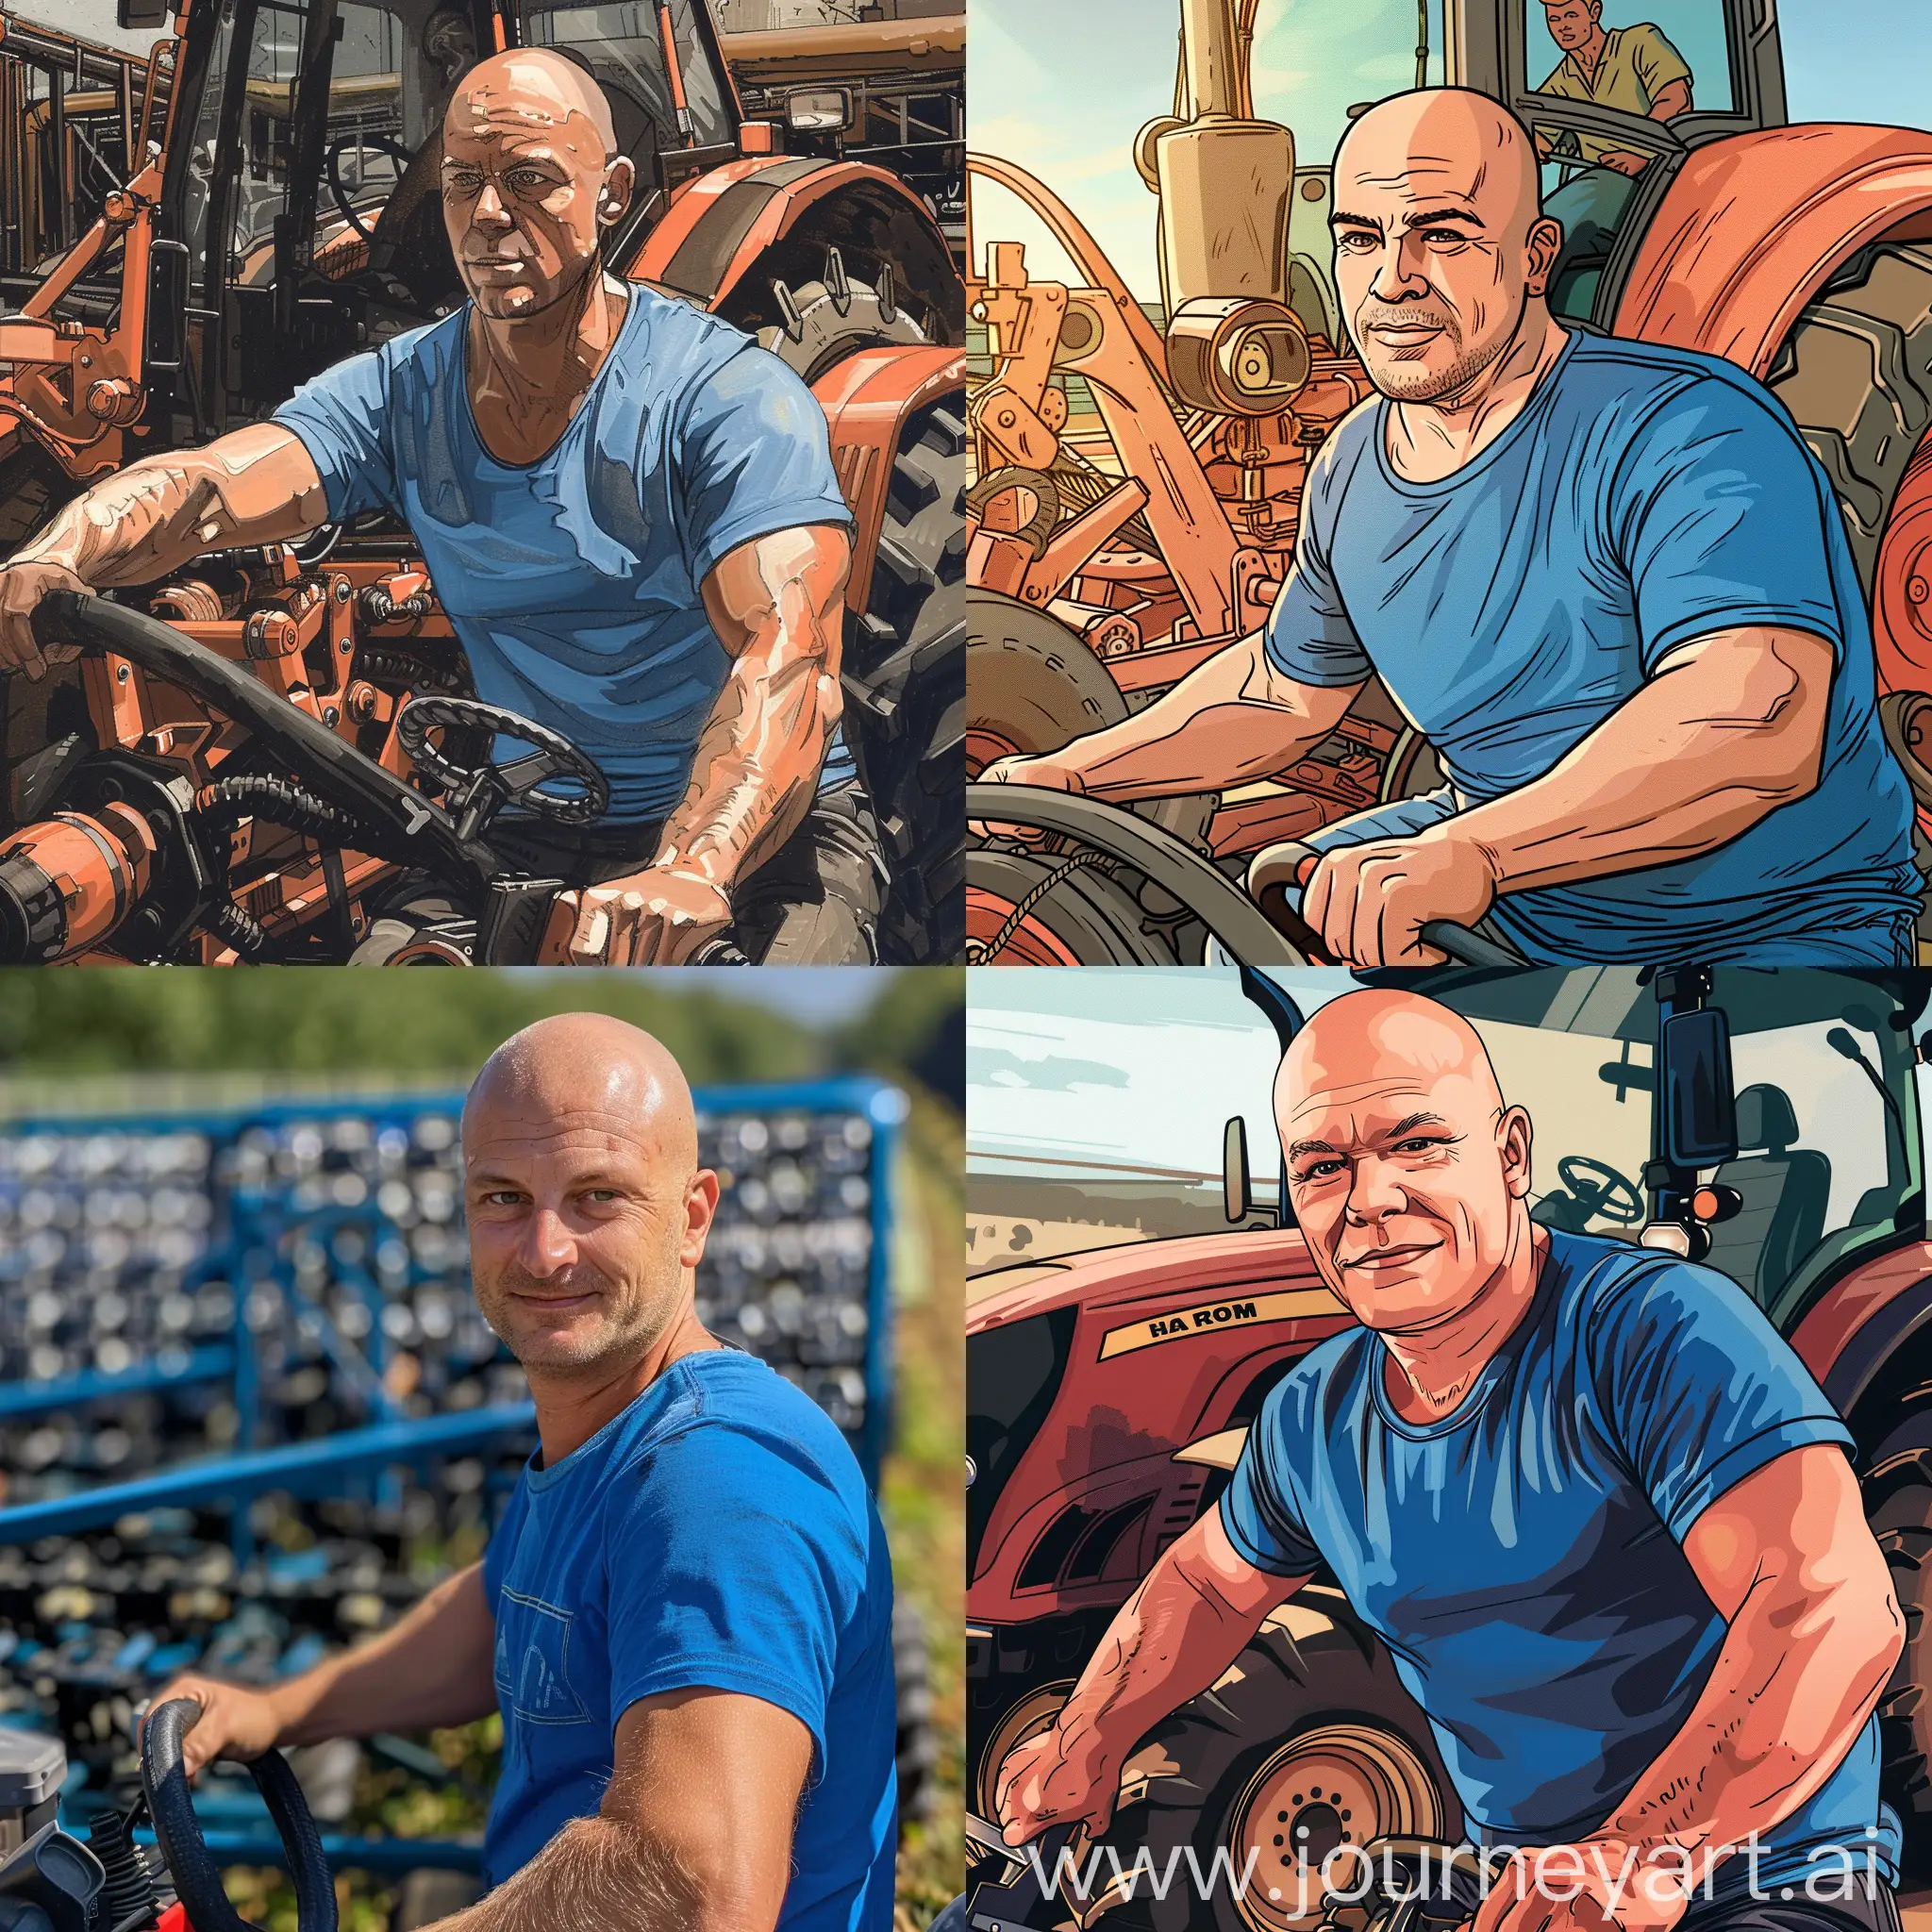 Bald-Man-in-Blue-TShirt-Operating-Tractor-on-Bitcoin-Farm